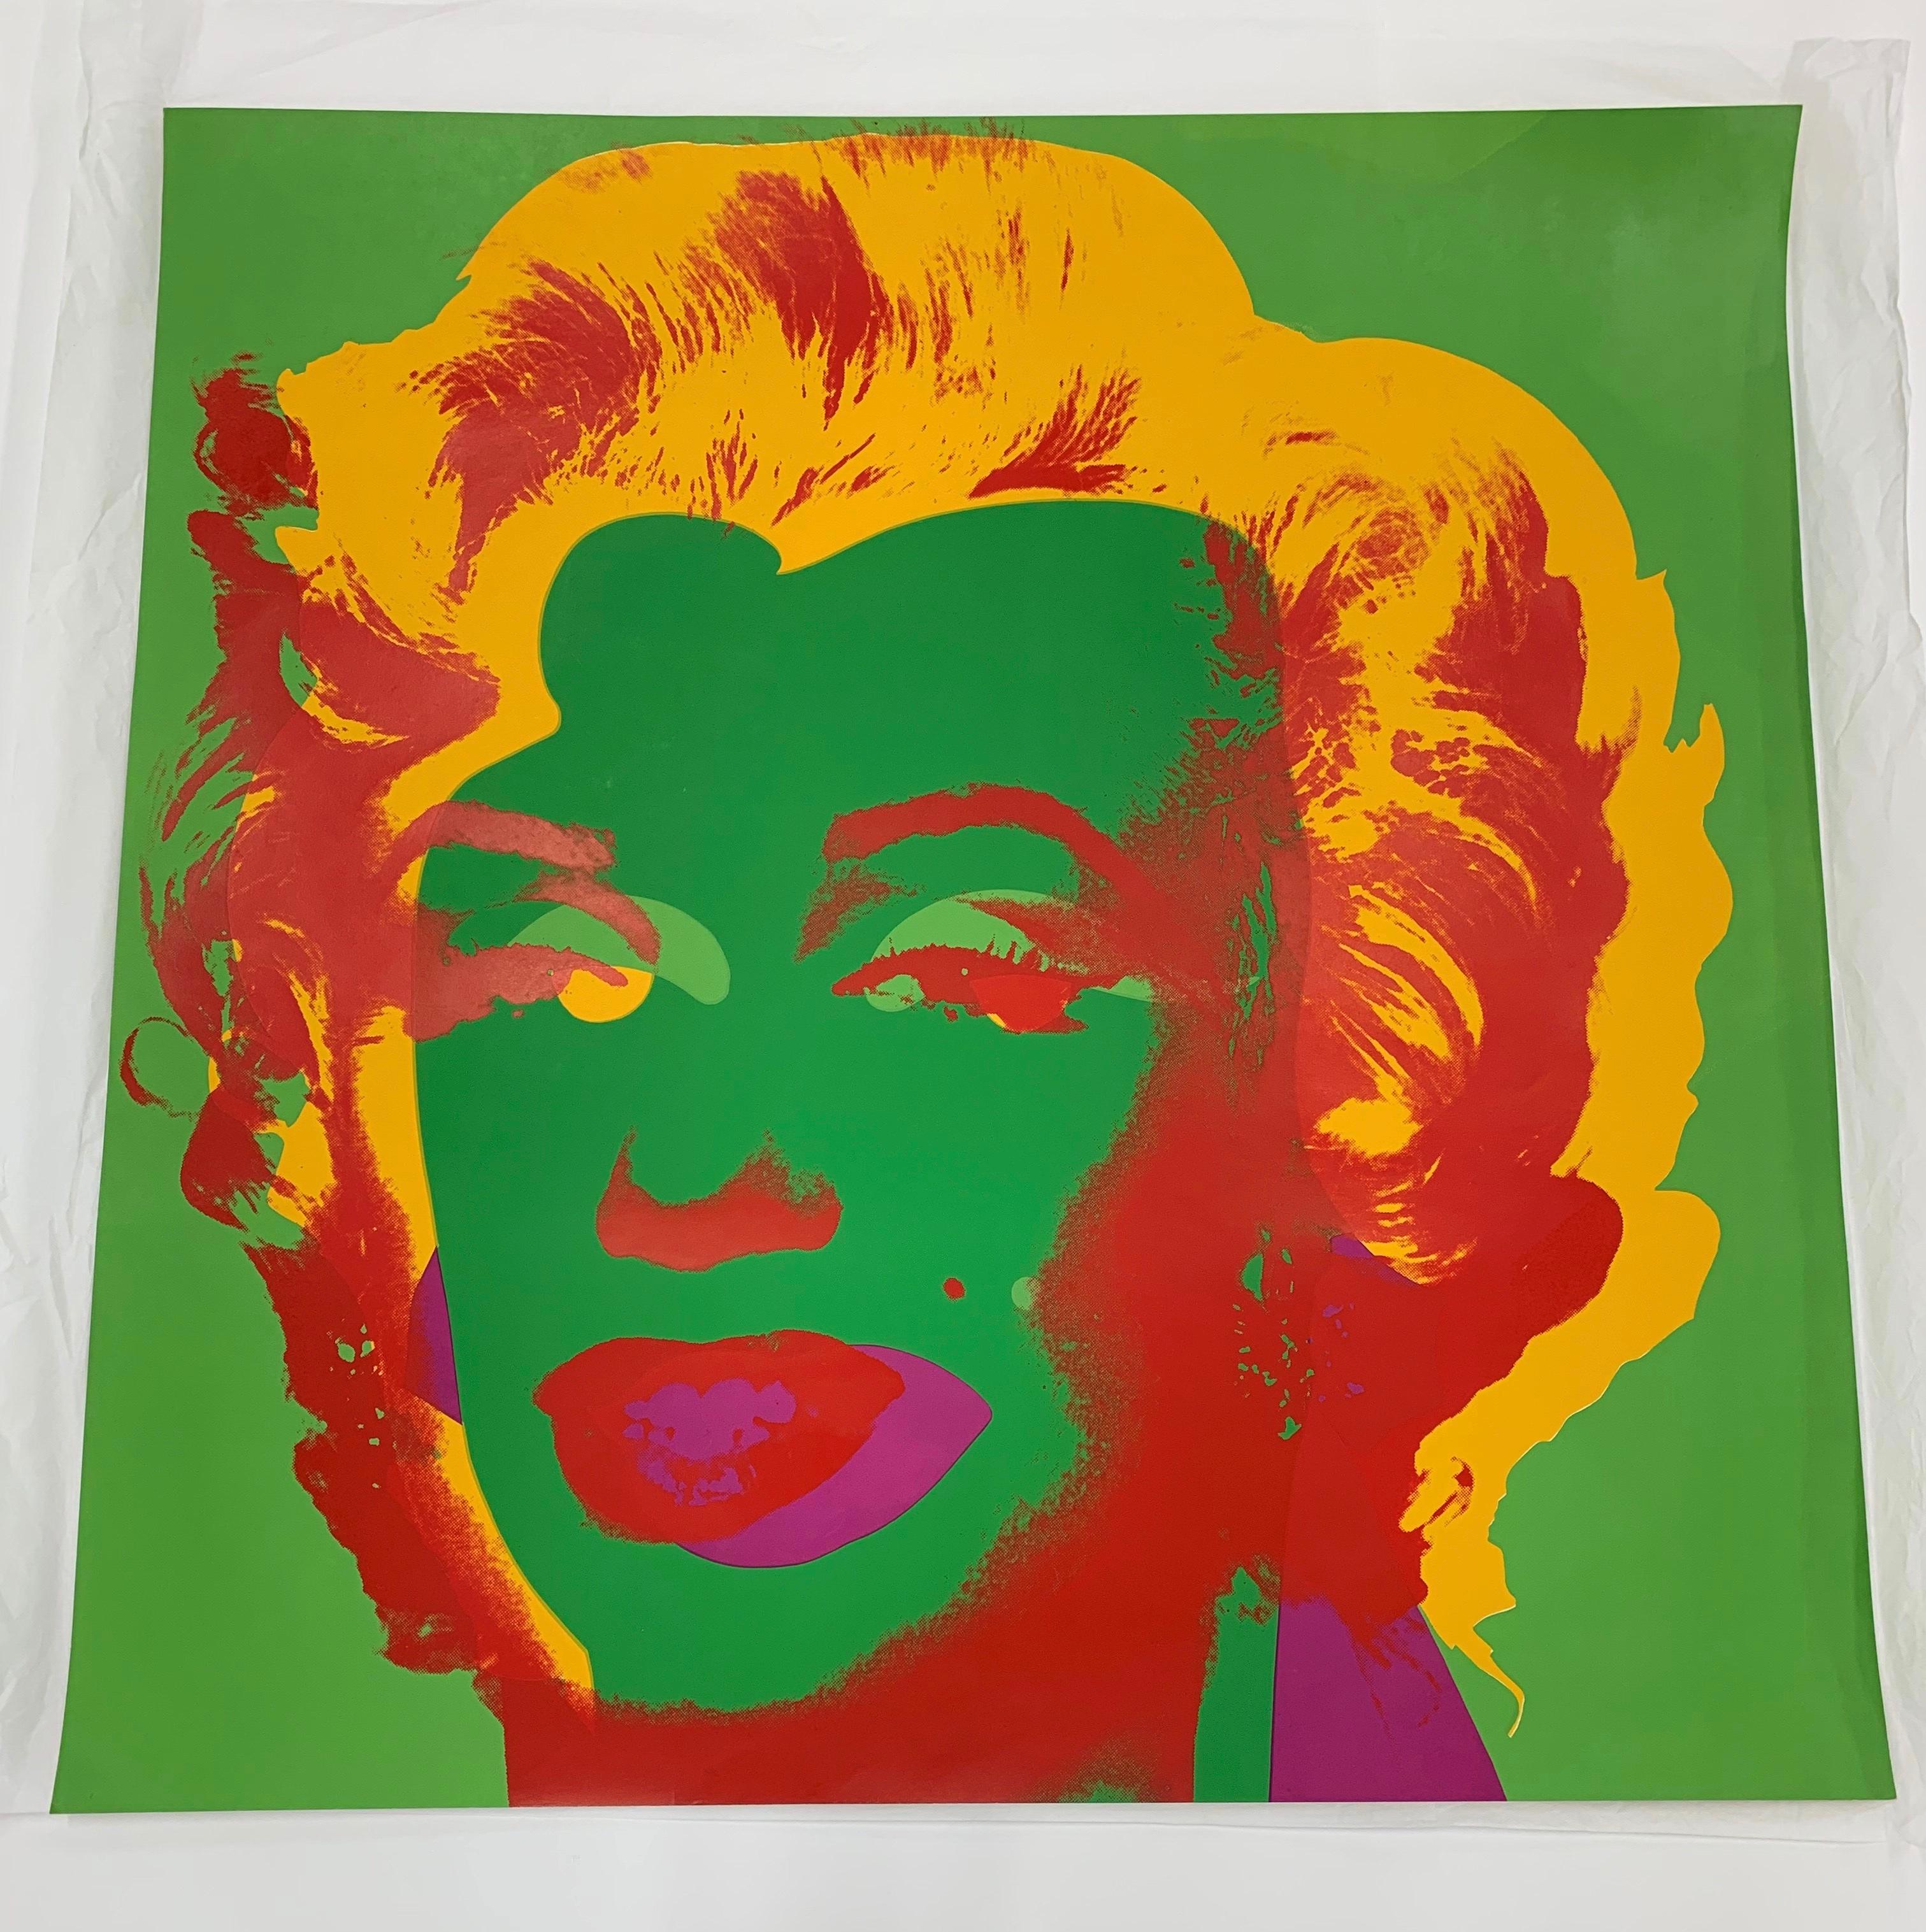 Andy Warhol Portrait Print - Marilyn Monroe (Marilyn) F&S II.25